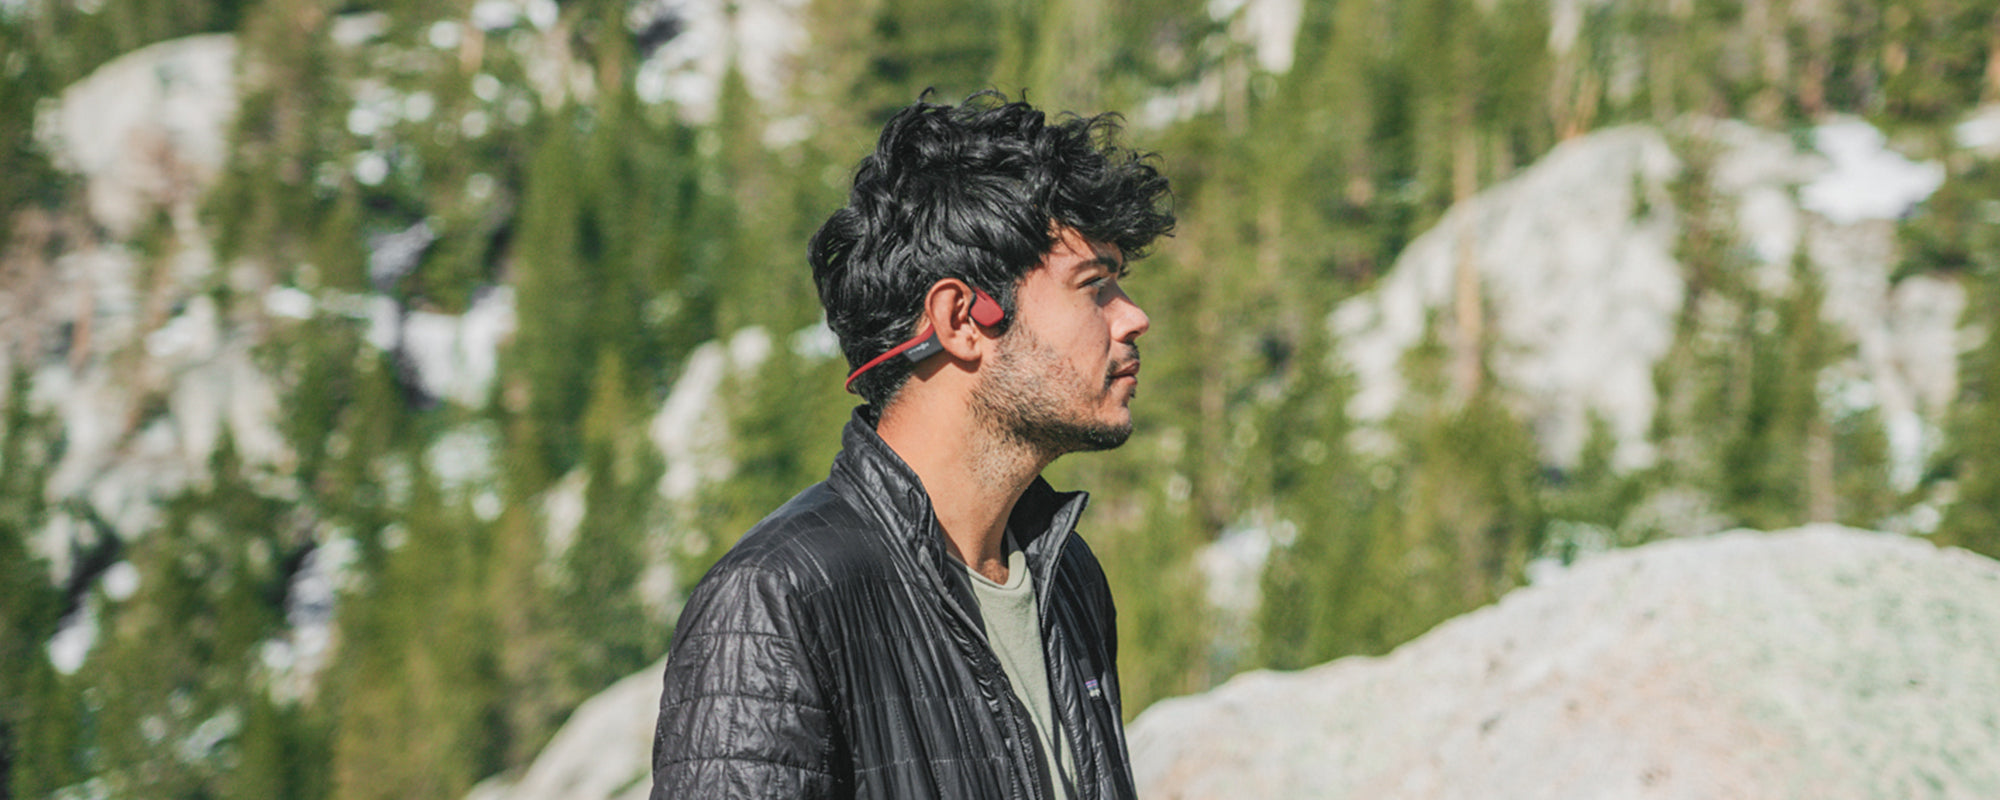 Man hiking in park wearing AfterShokz Air wireless headphones